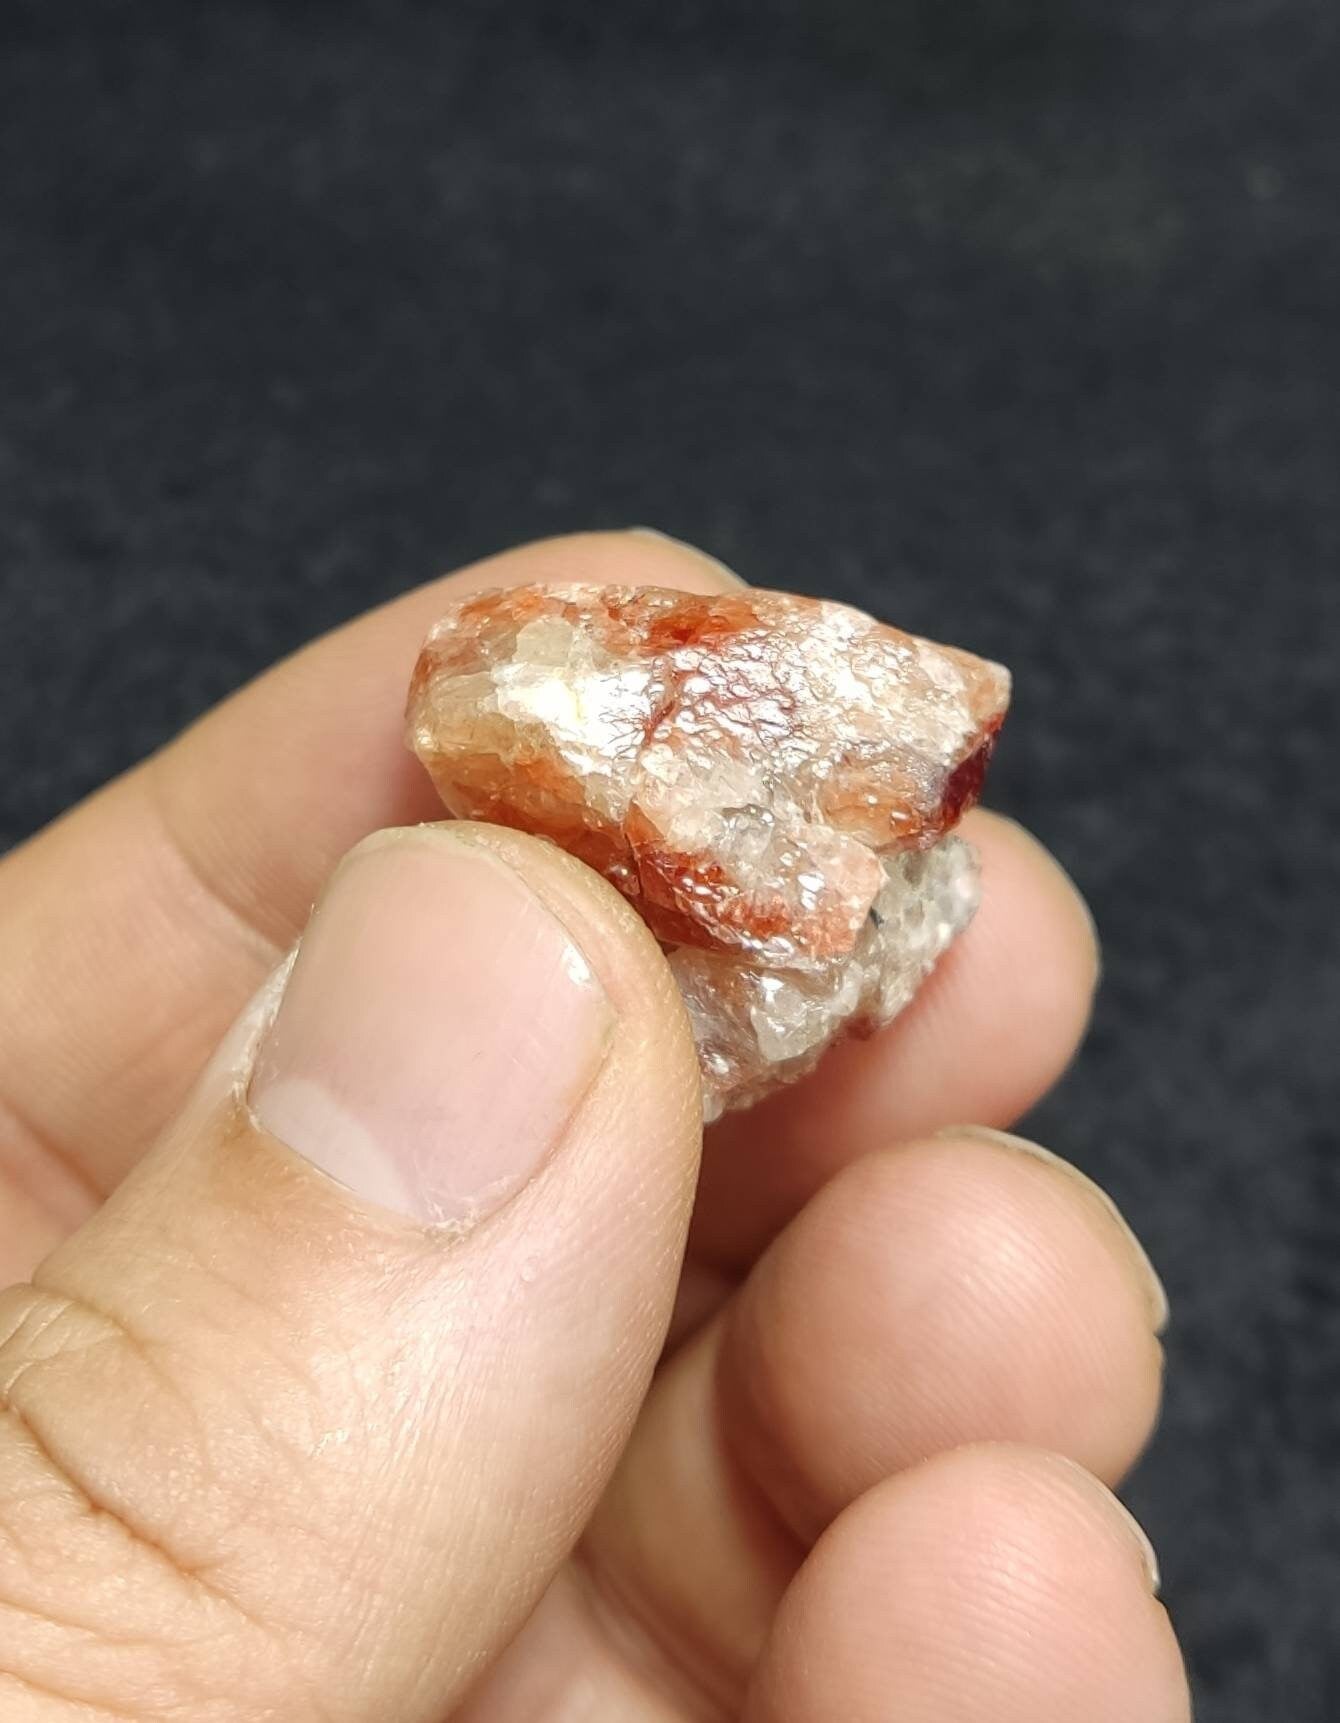 An amazing specimen of terminated zircon crystal 24 grams